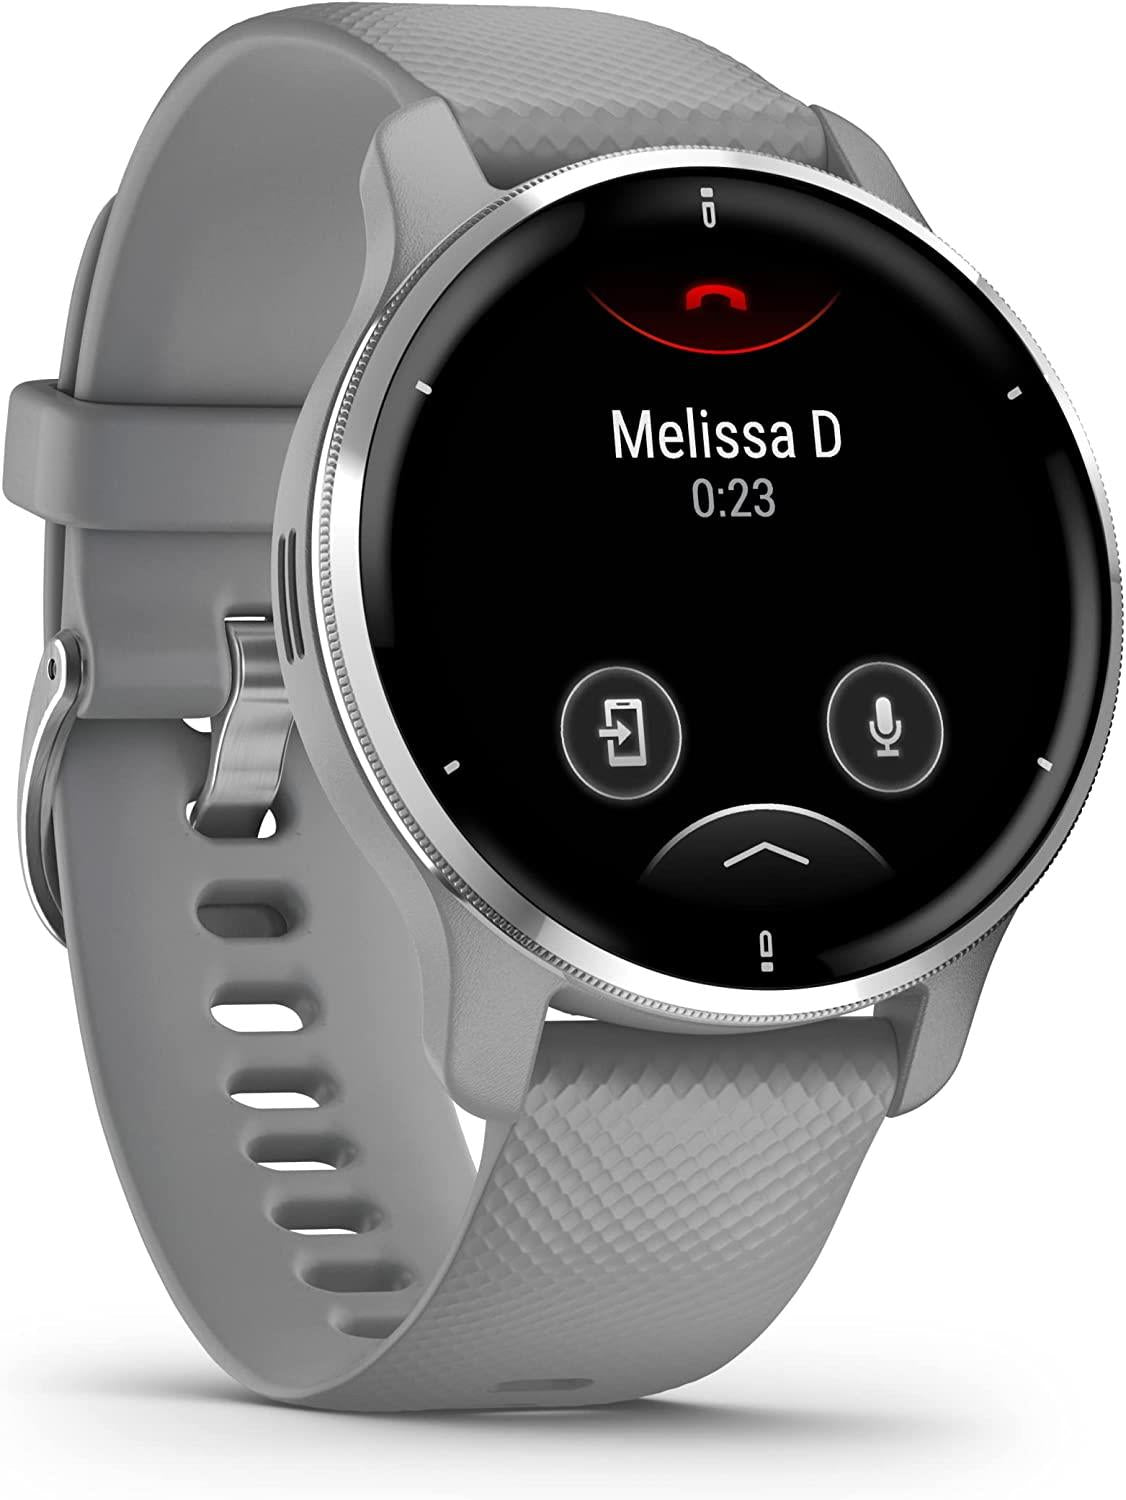 Garmin Venu 2 Plus GPS Smart Watch Heart Rate Activity Monitor - Grey